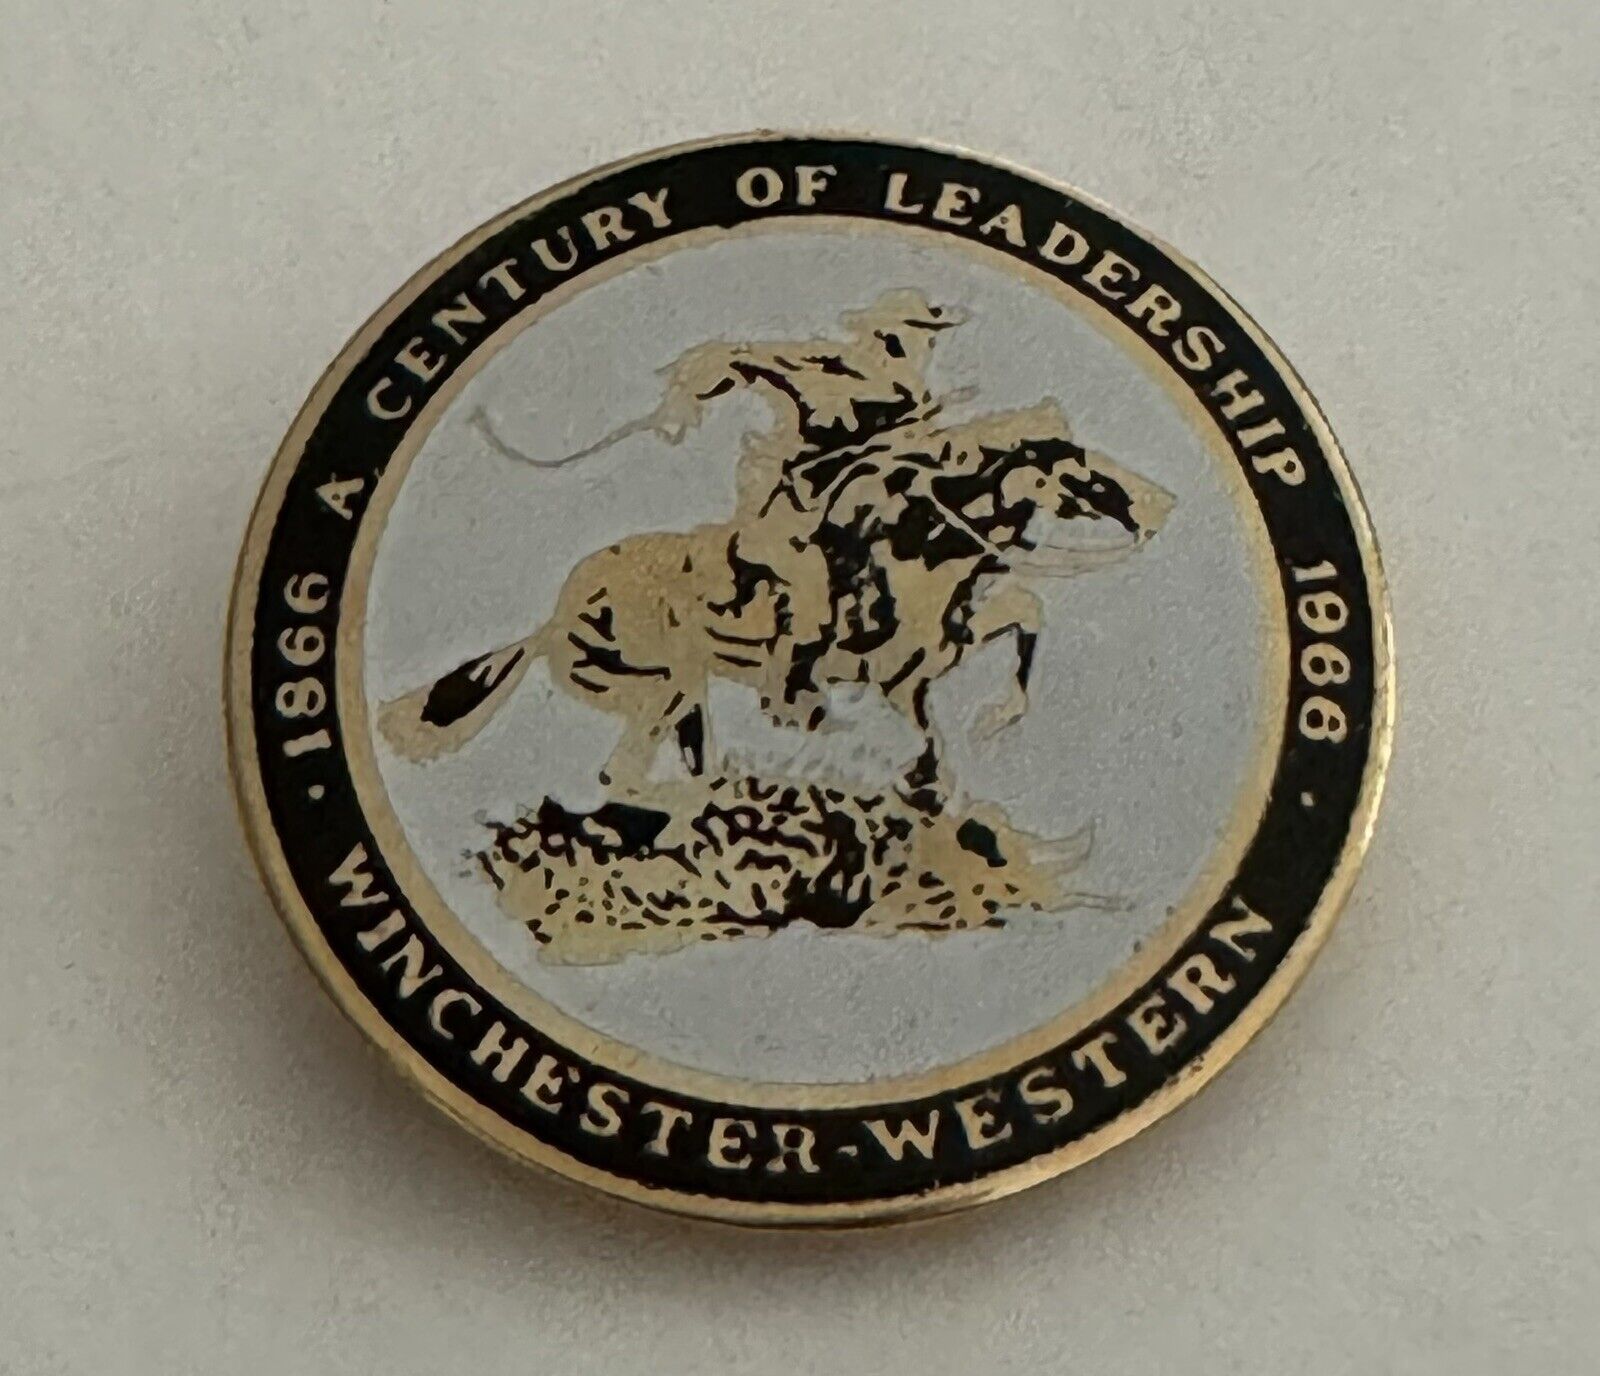 WINCHESTER WESTERN 1866-1966 Century of Leadership PINBACK Enameled Brass Pin